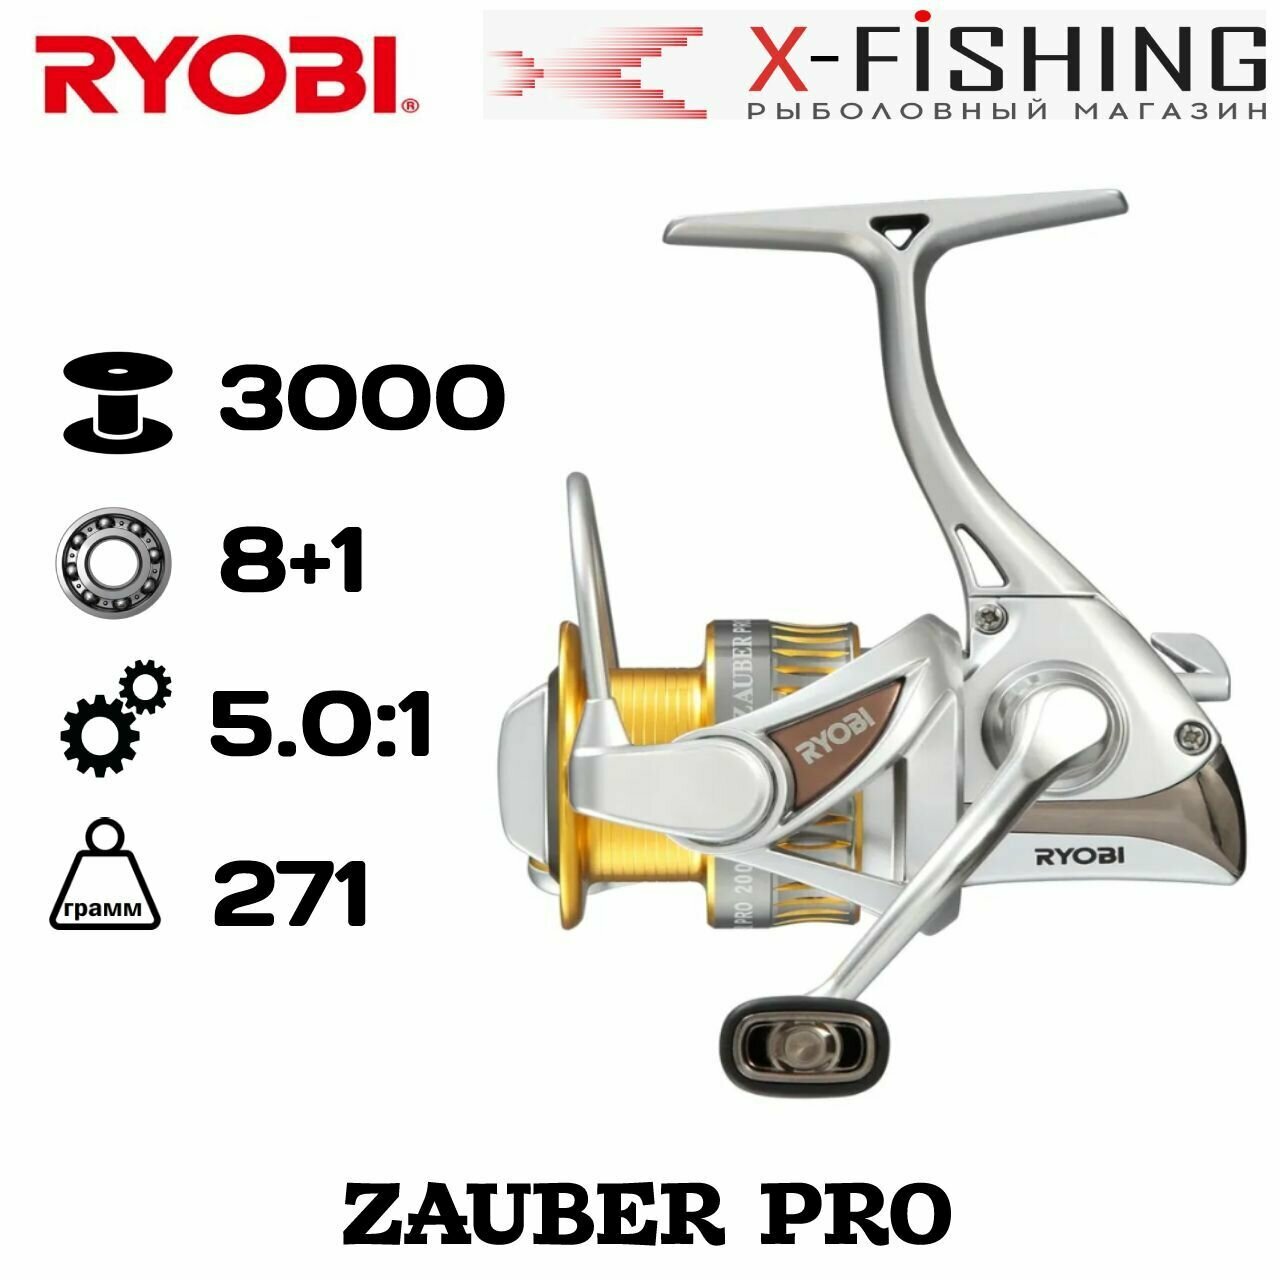 Катушка для рыбалки Ryobi Zauber Pro 3000 / катушка для спиннинга